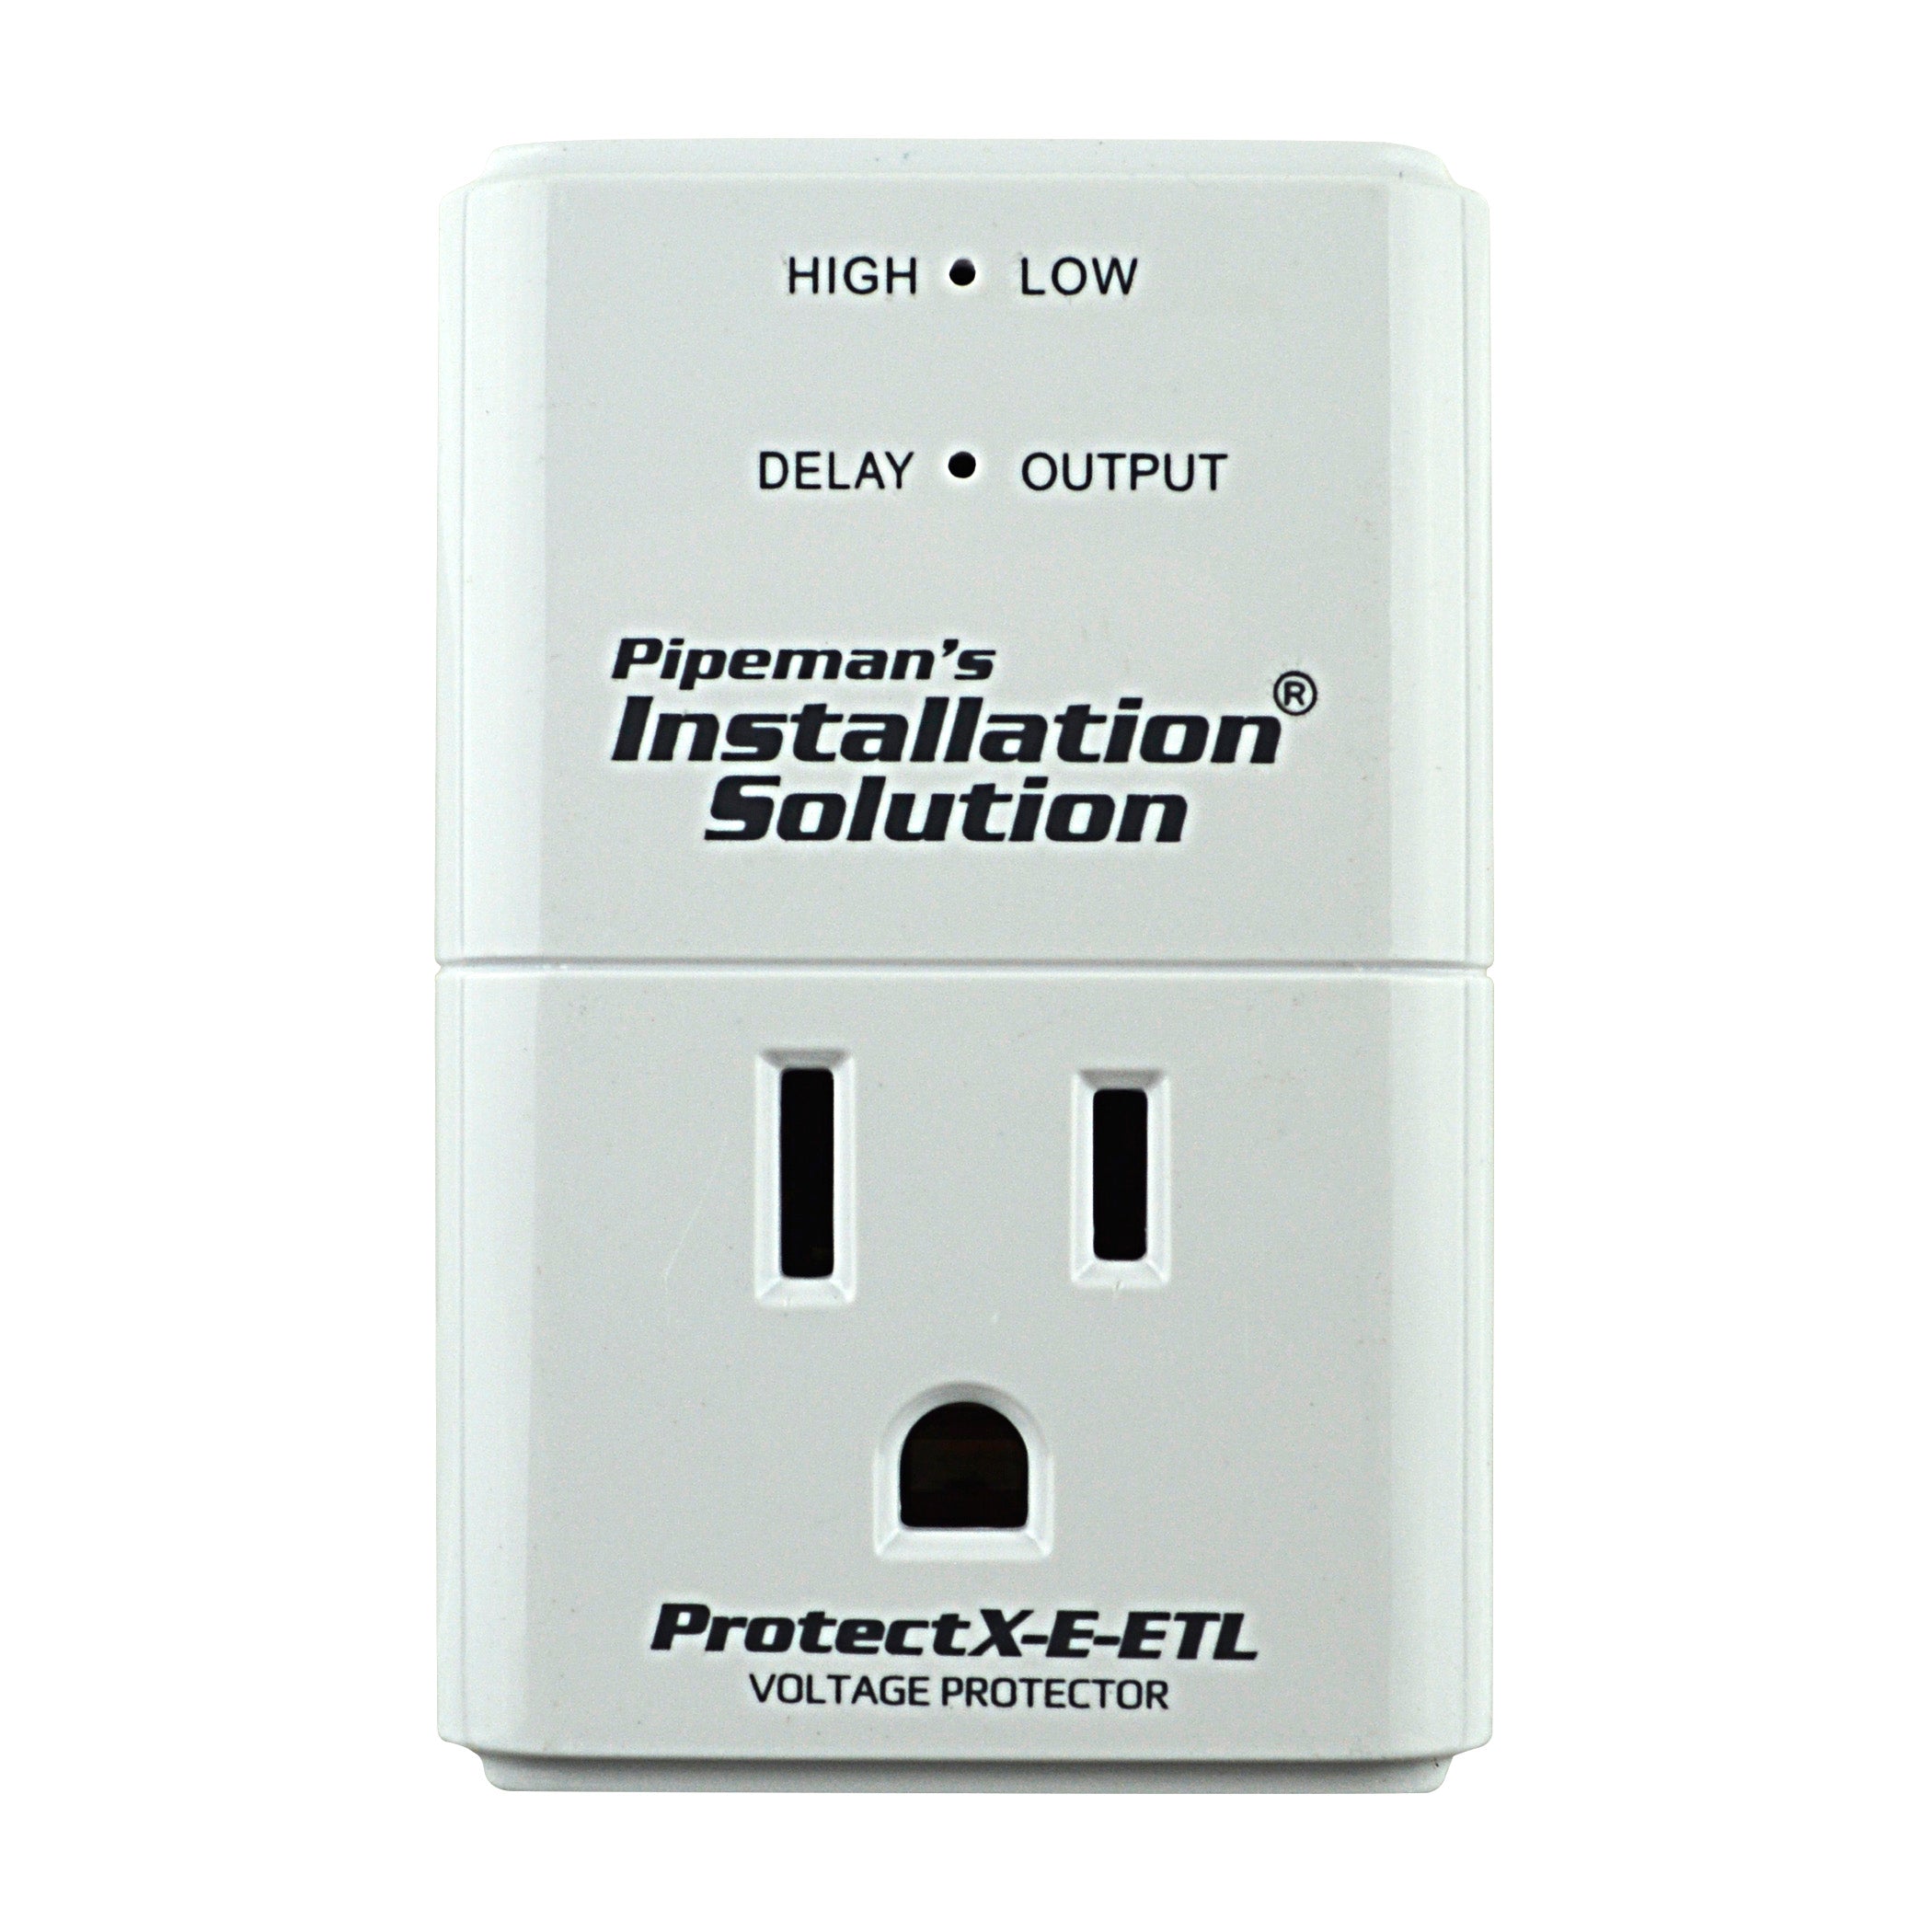 PROTECTX-E-ETL Voltage Protector – Installation Solution